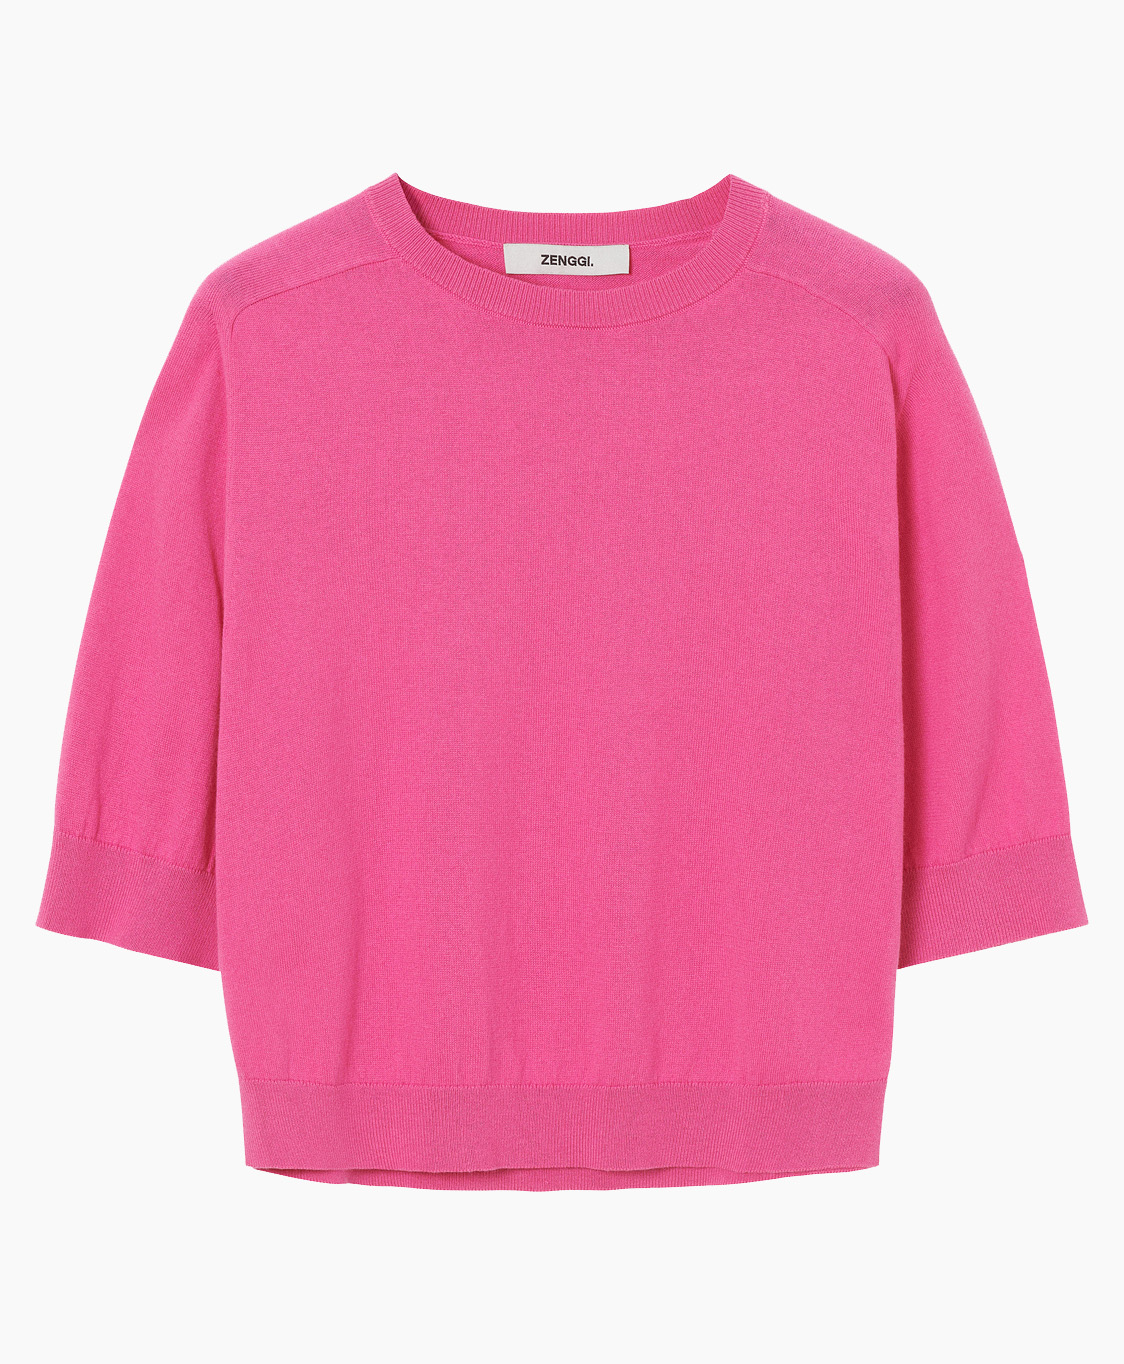 Zenggi Top Organic Cotton Cashmere Top Pink